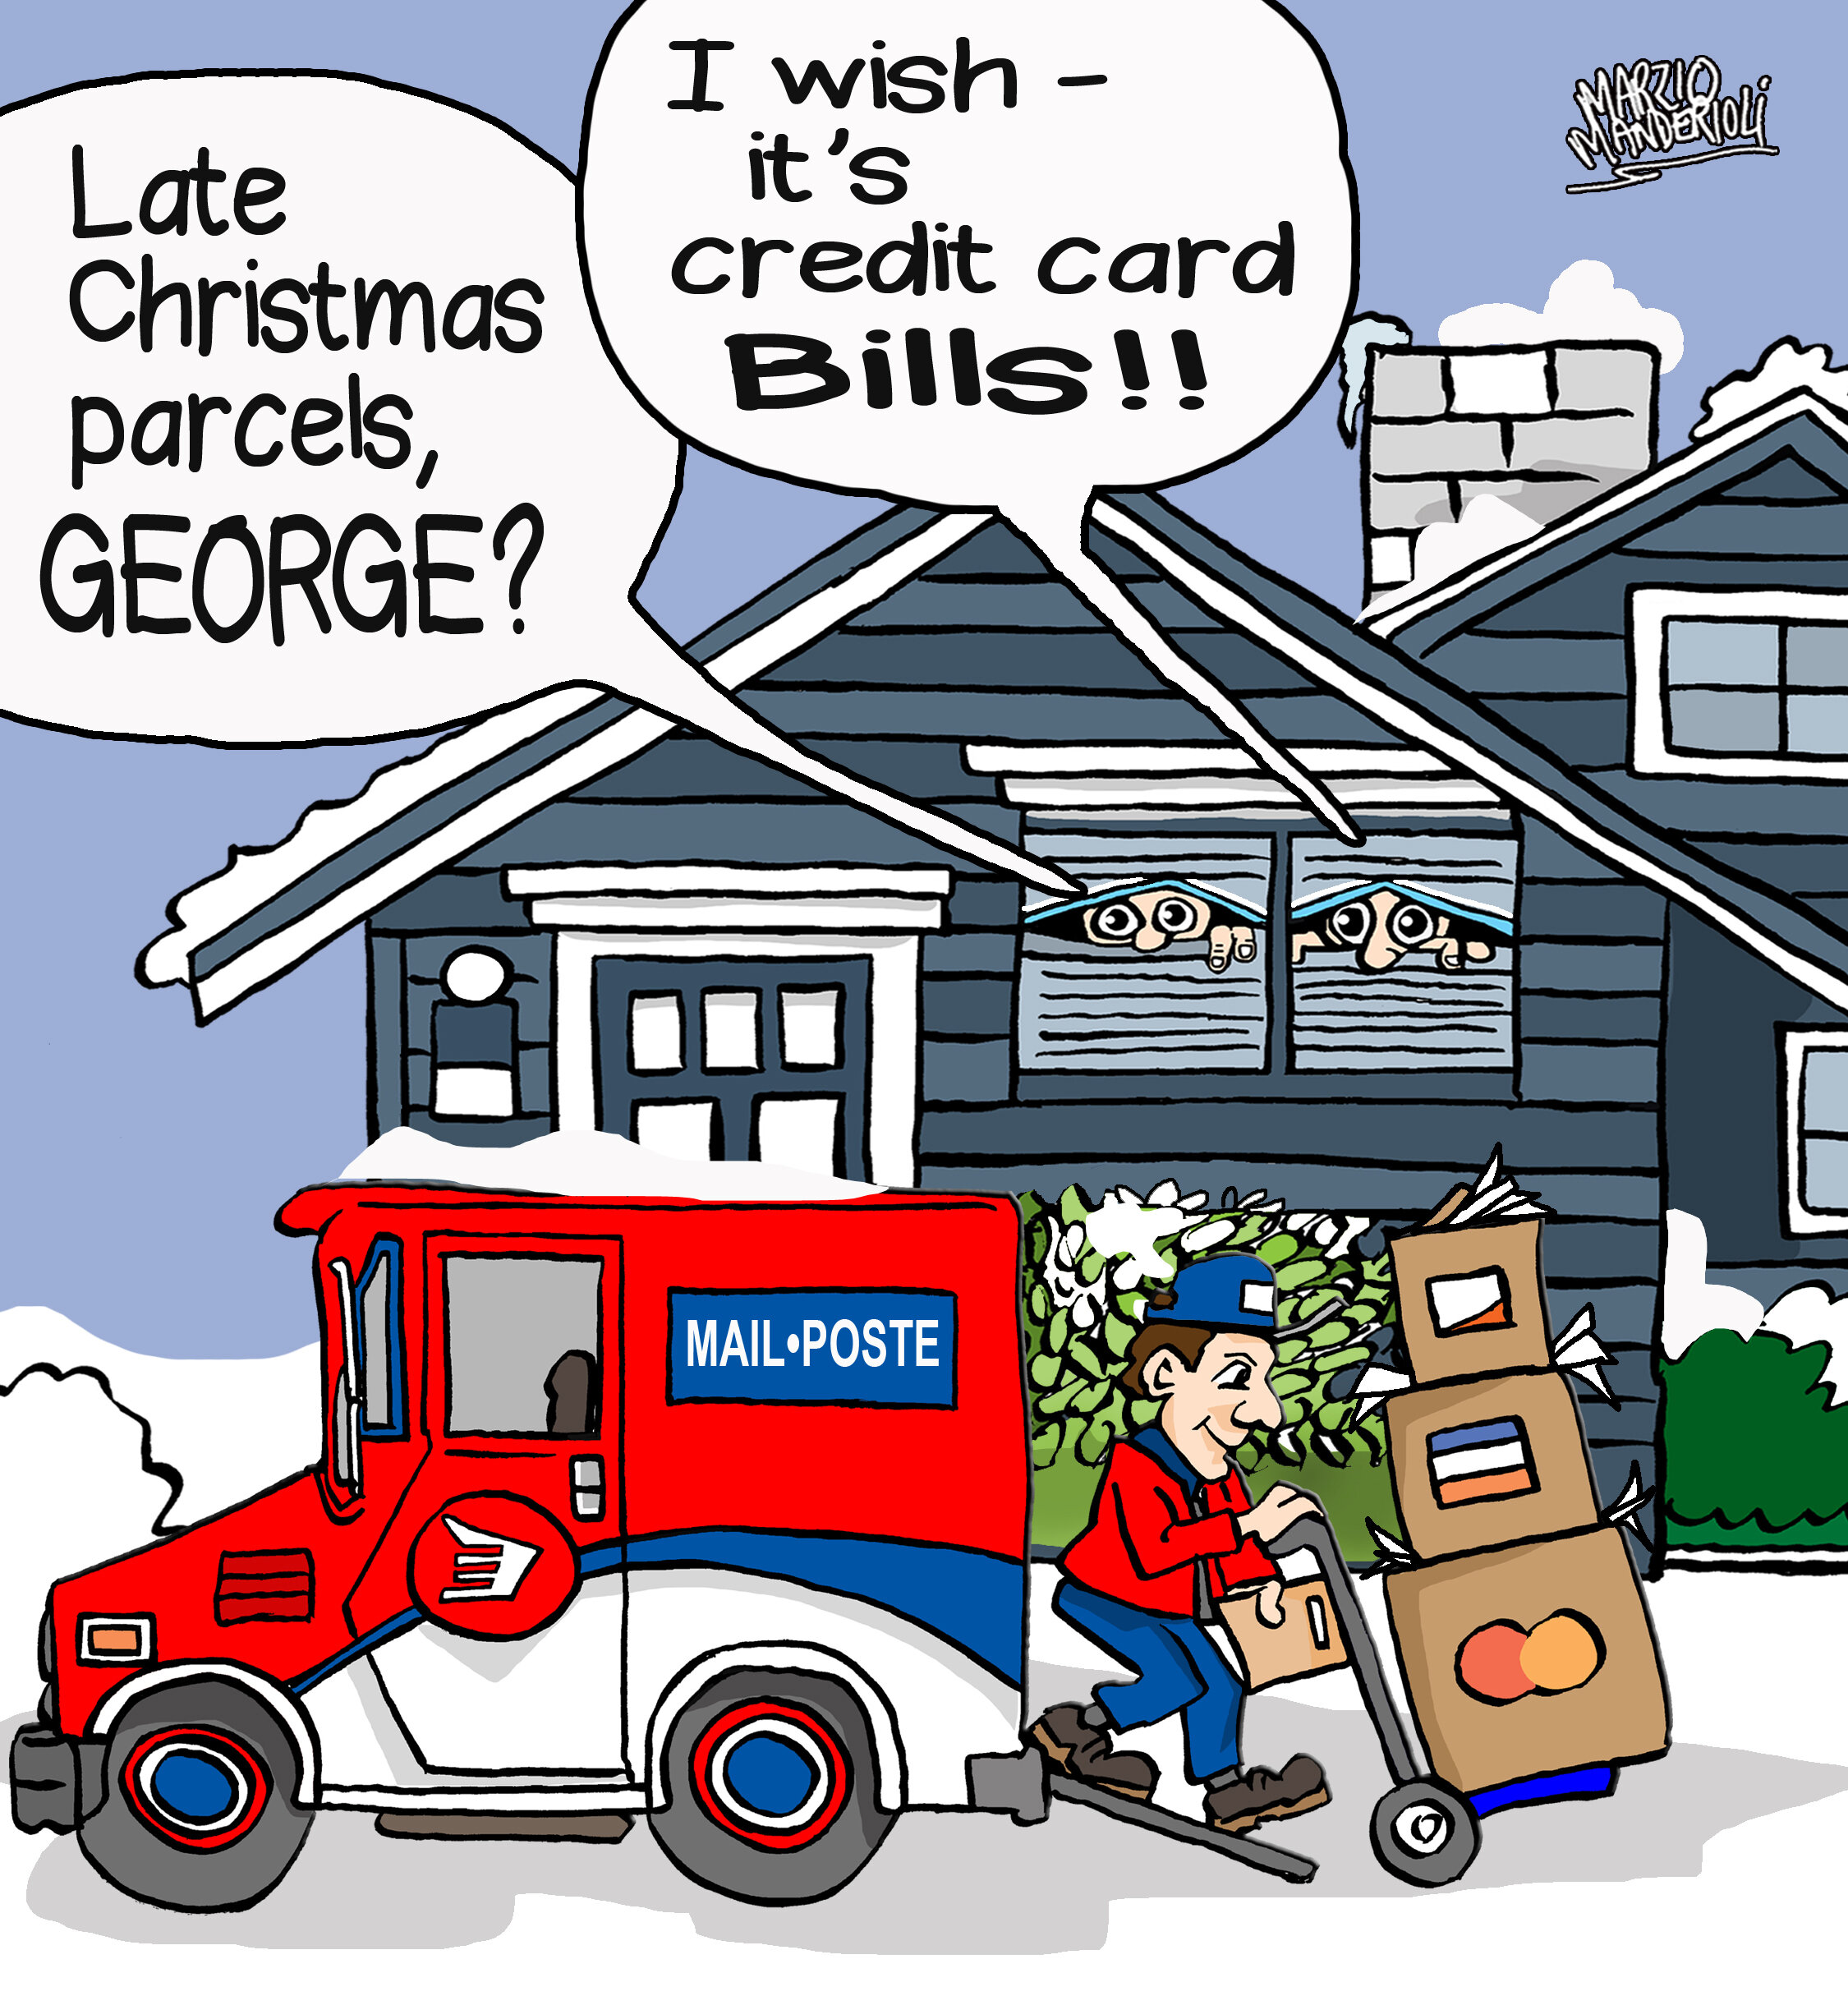 Credit Card Bills Cartoon.jpg